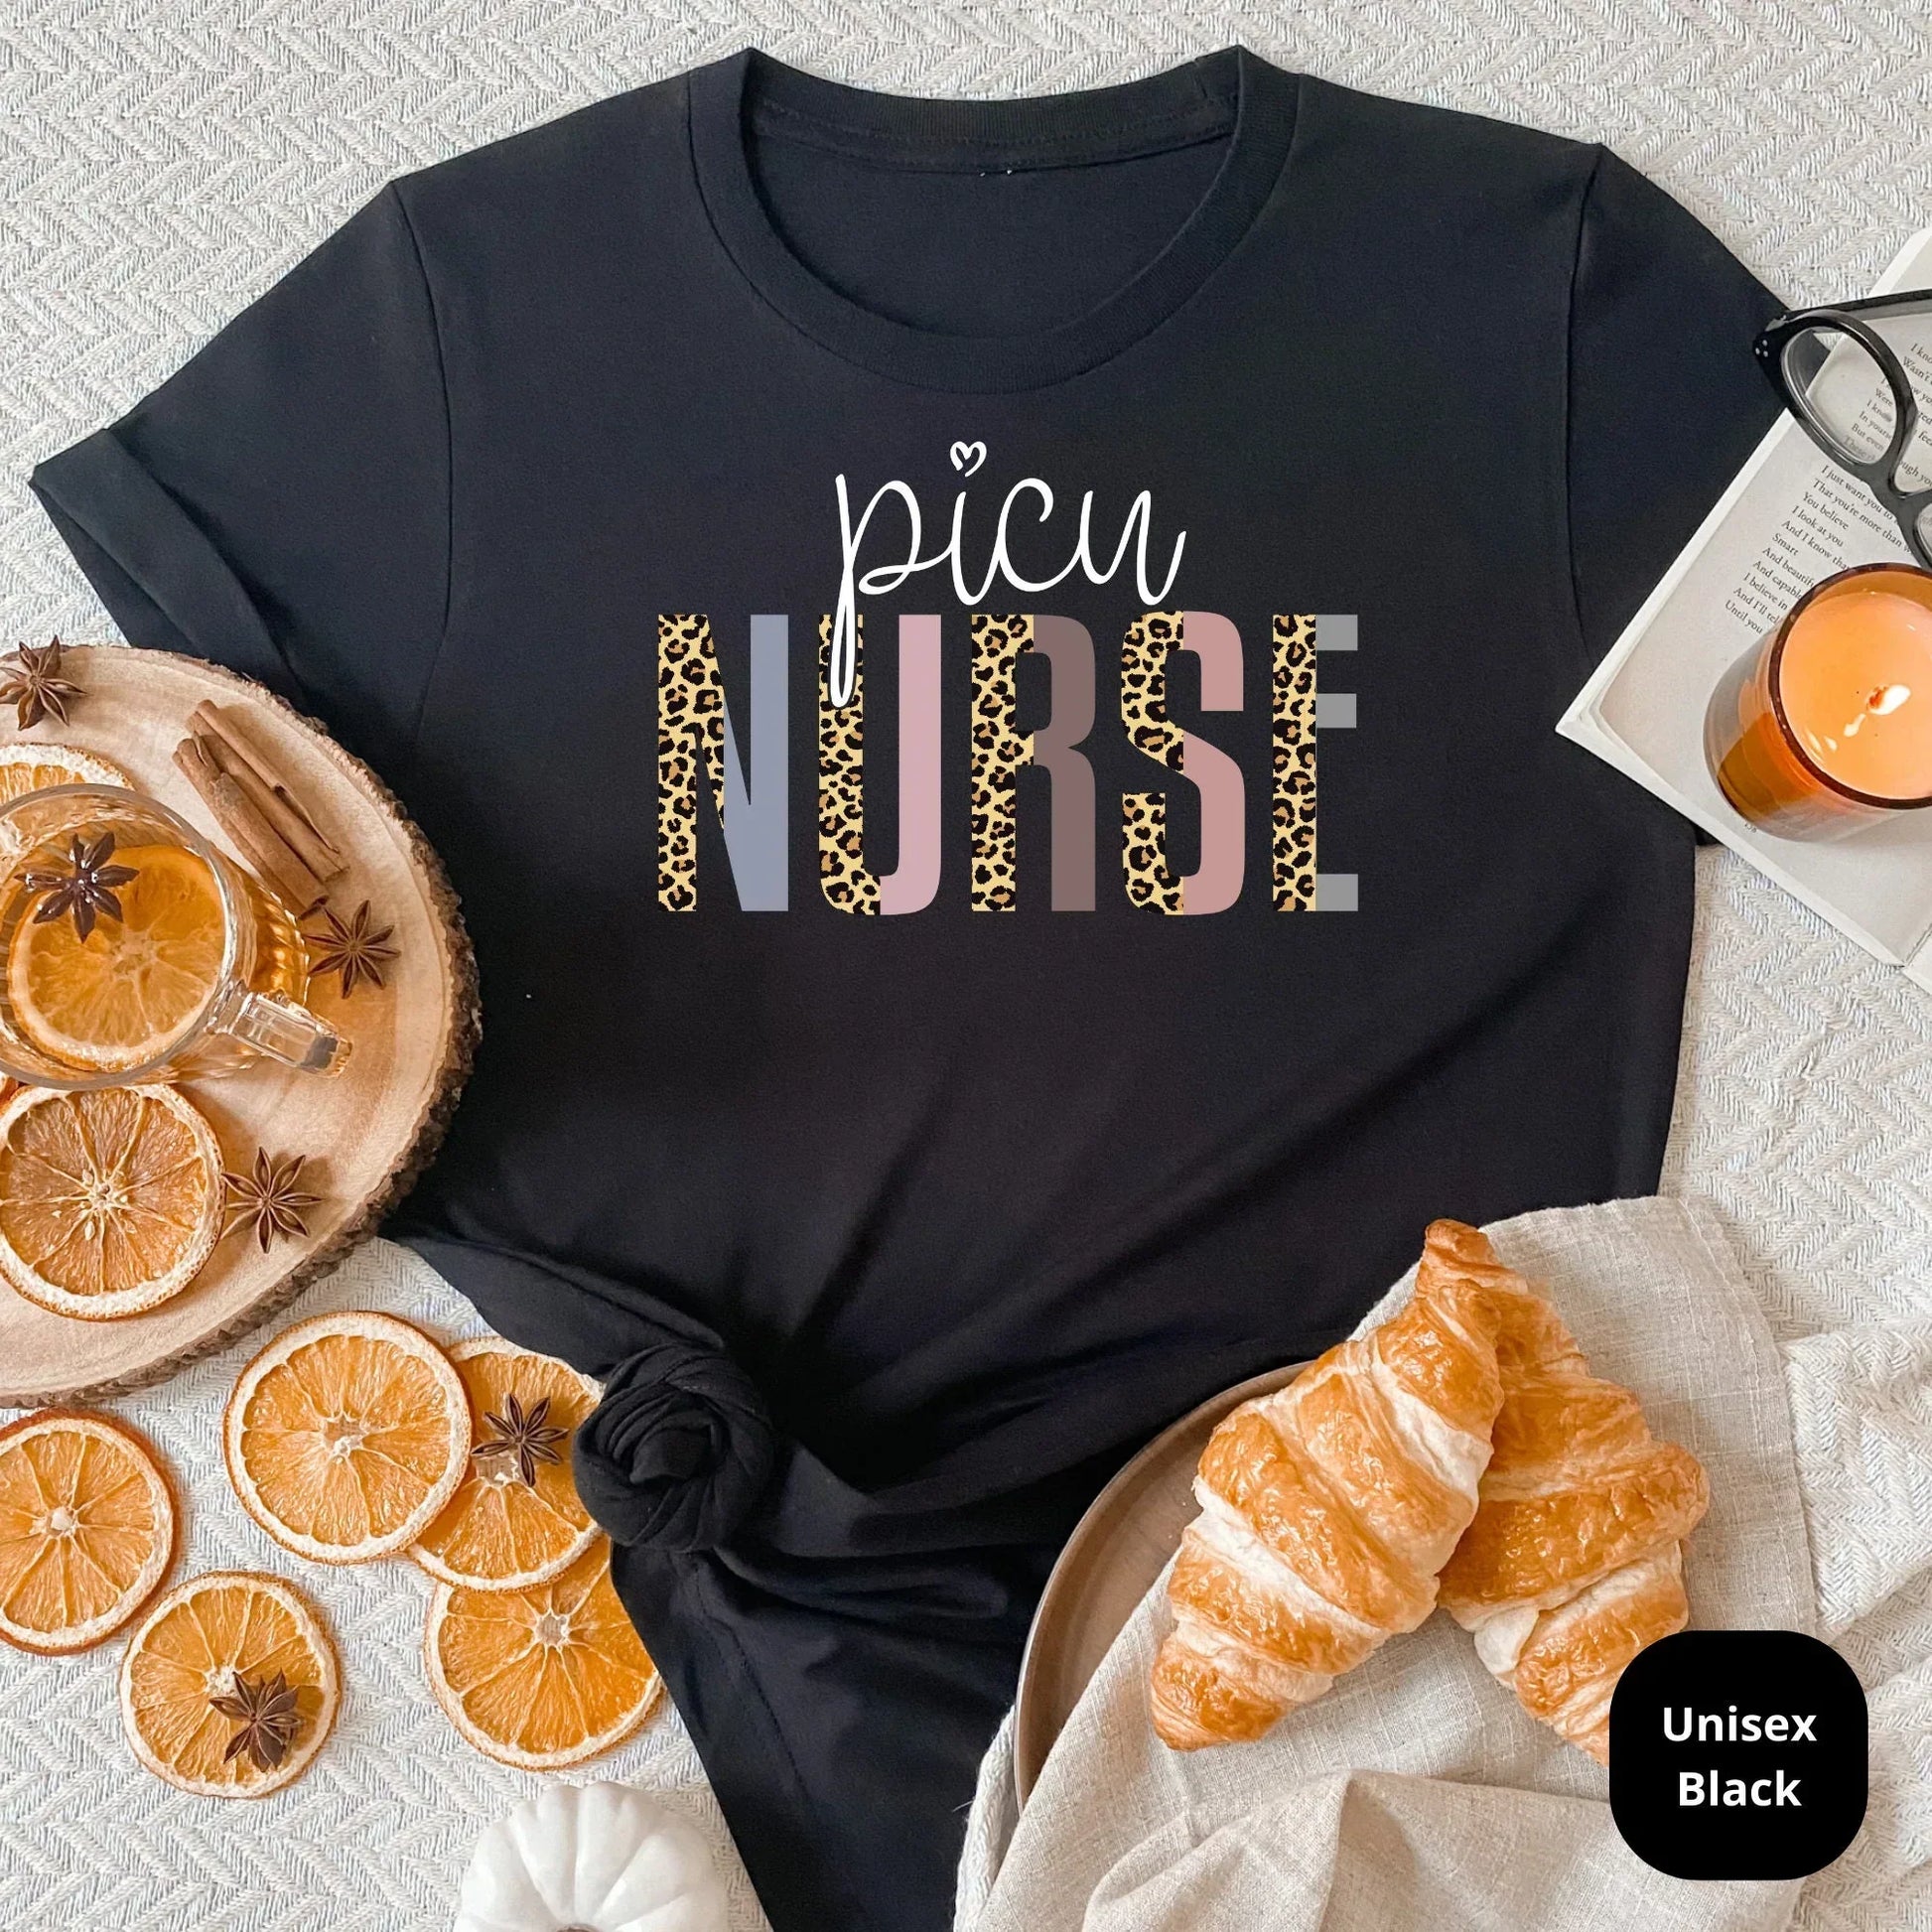 Pediatric Nurse Shirt, PICU Nurse, Pediatric Intensive Care Unit, Registered Nurse Shirt, Practitioner Appreciation Gift for Her, Nurse Week HMDesignStudioUS